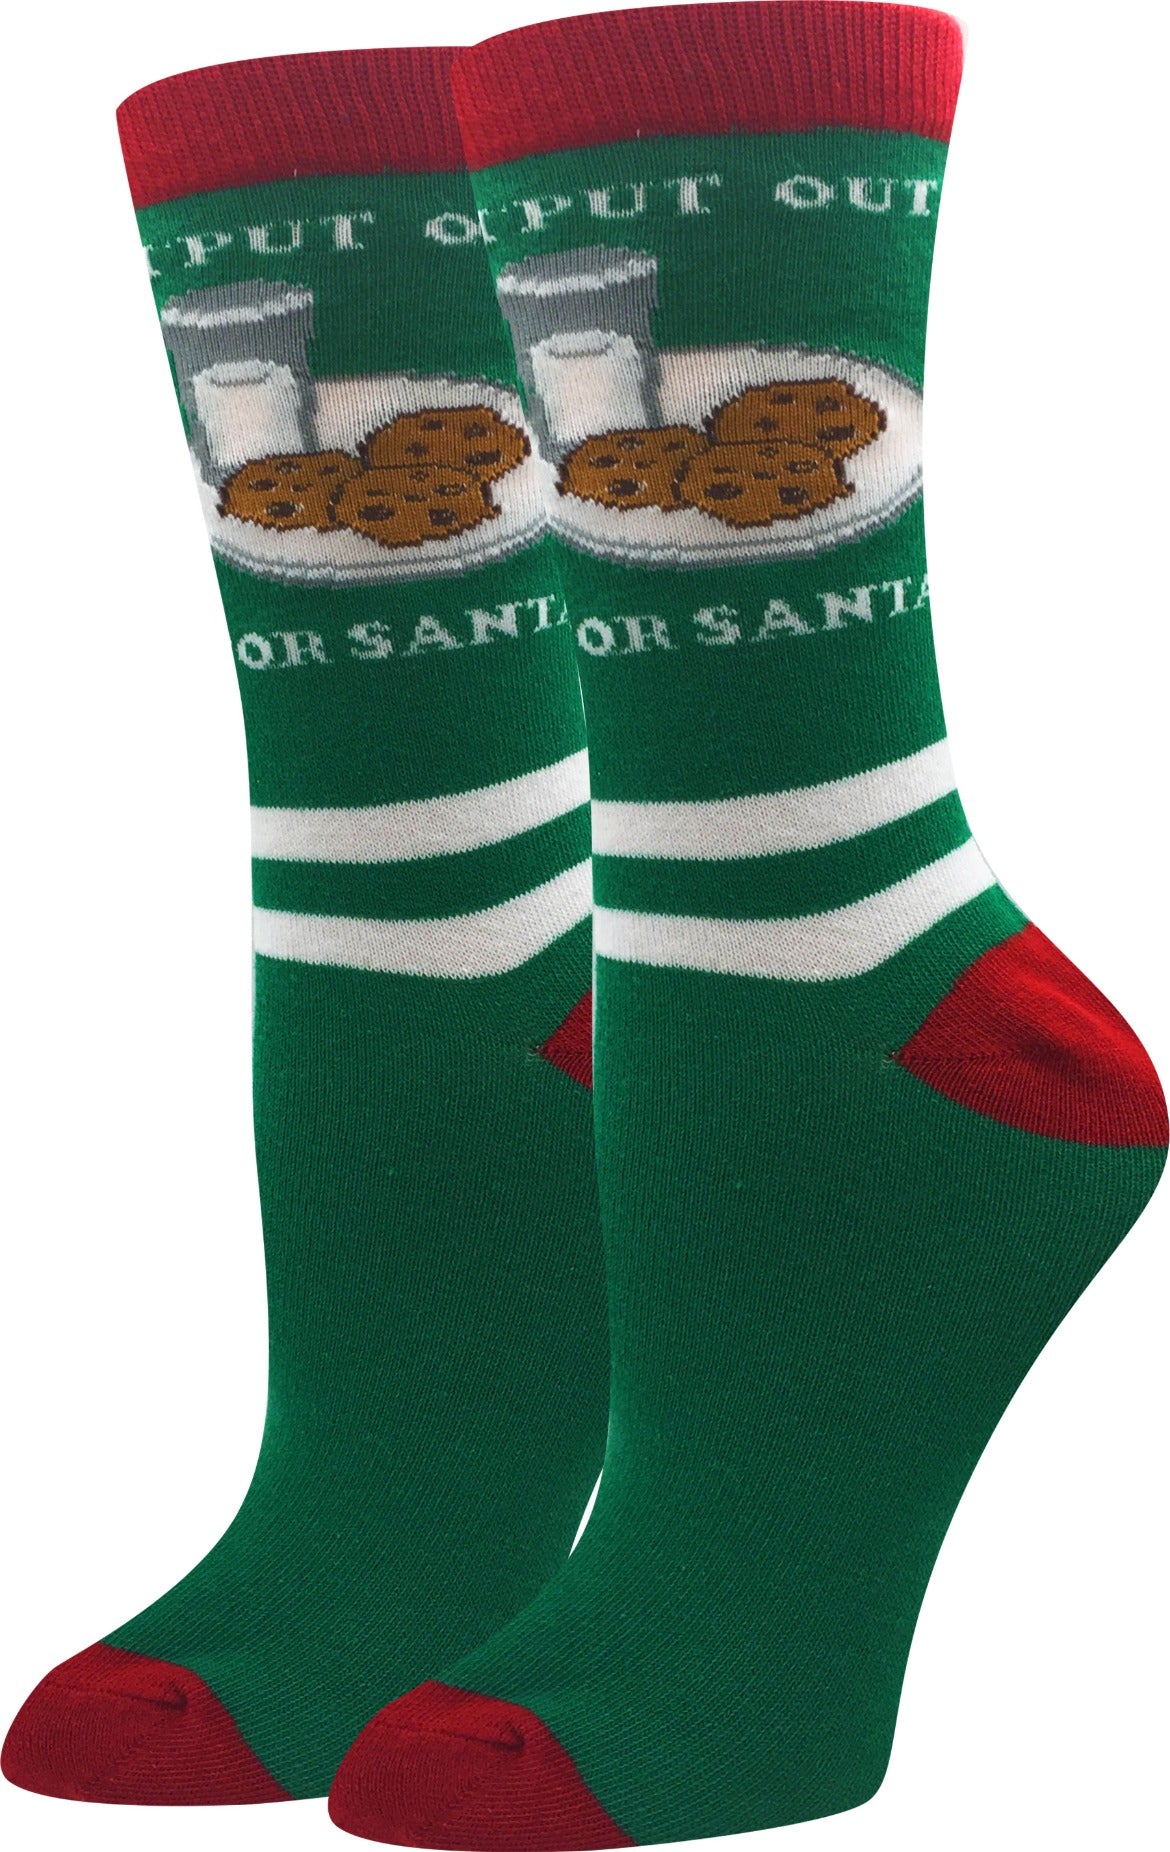 Put Out For Santa Socks